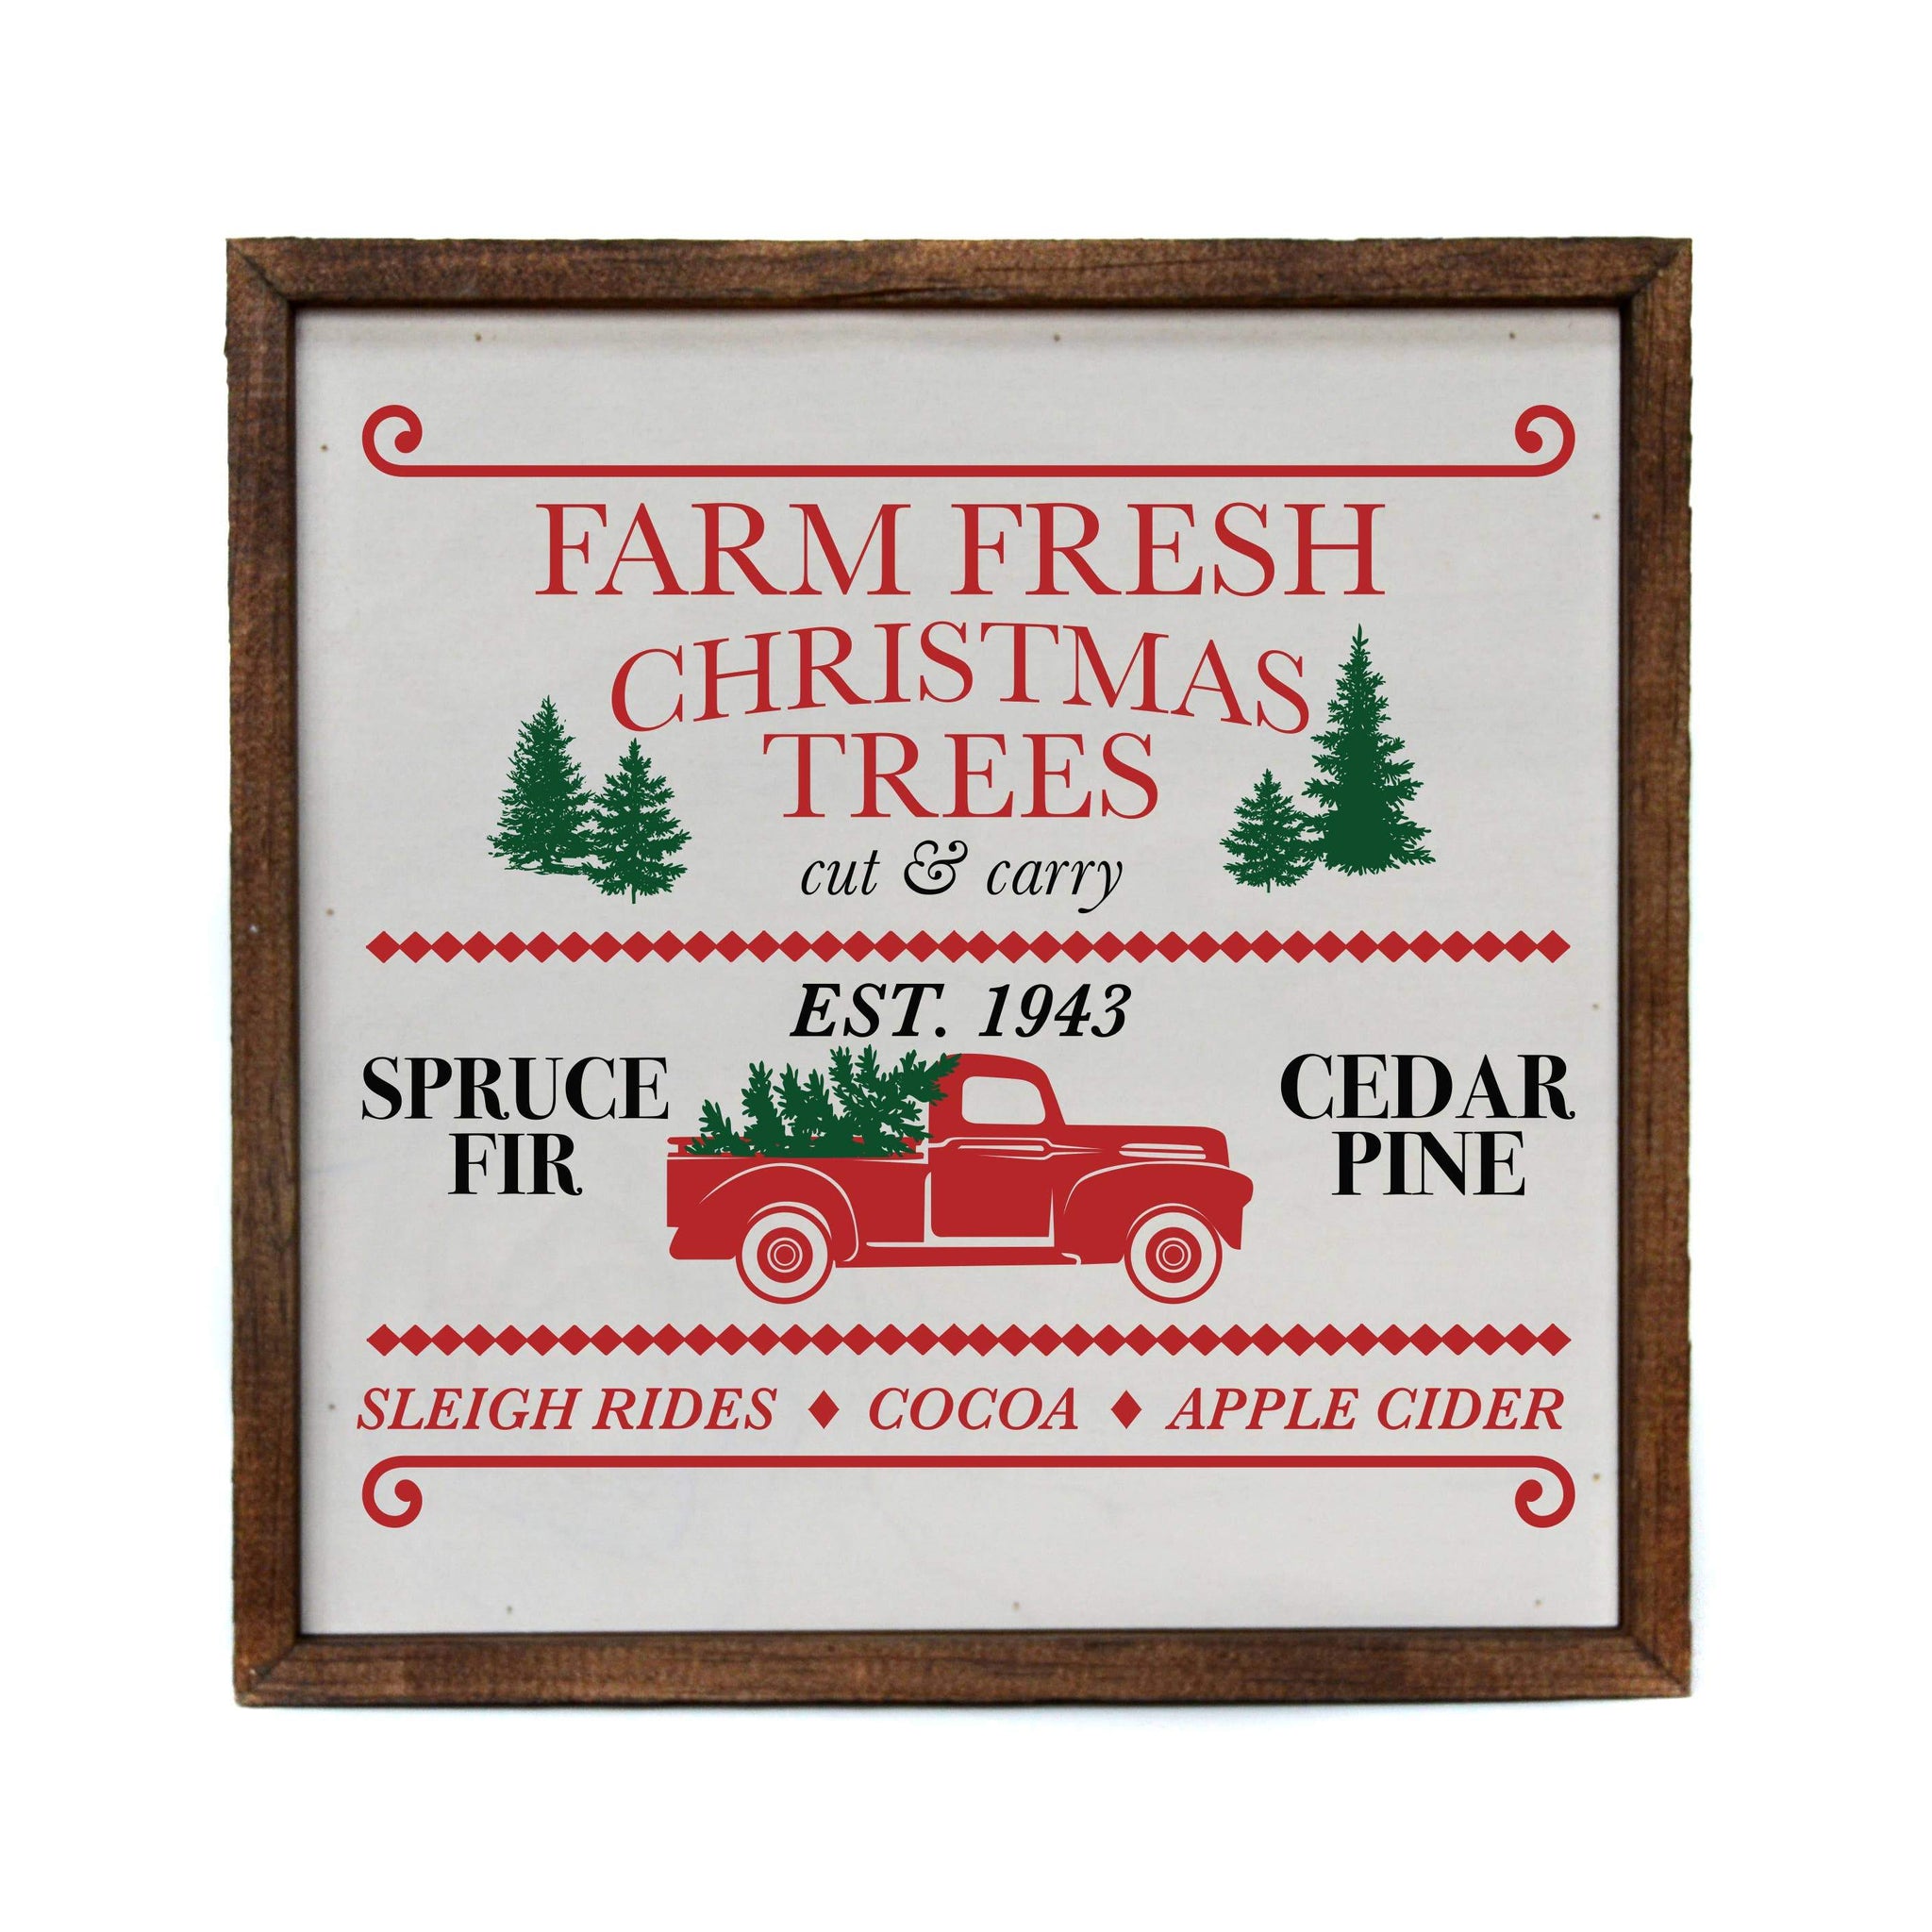 Farm Fresh Christmas Trees Truck Sign - 10x10